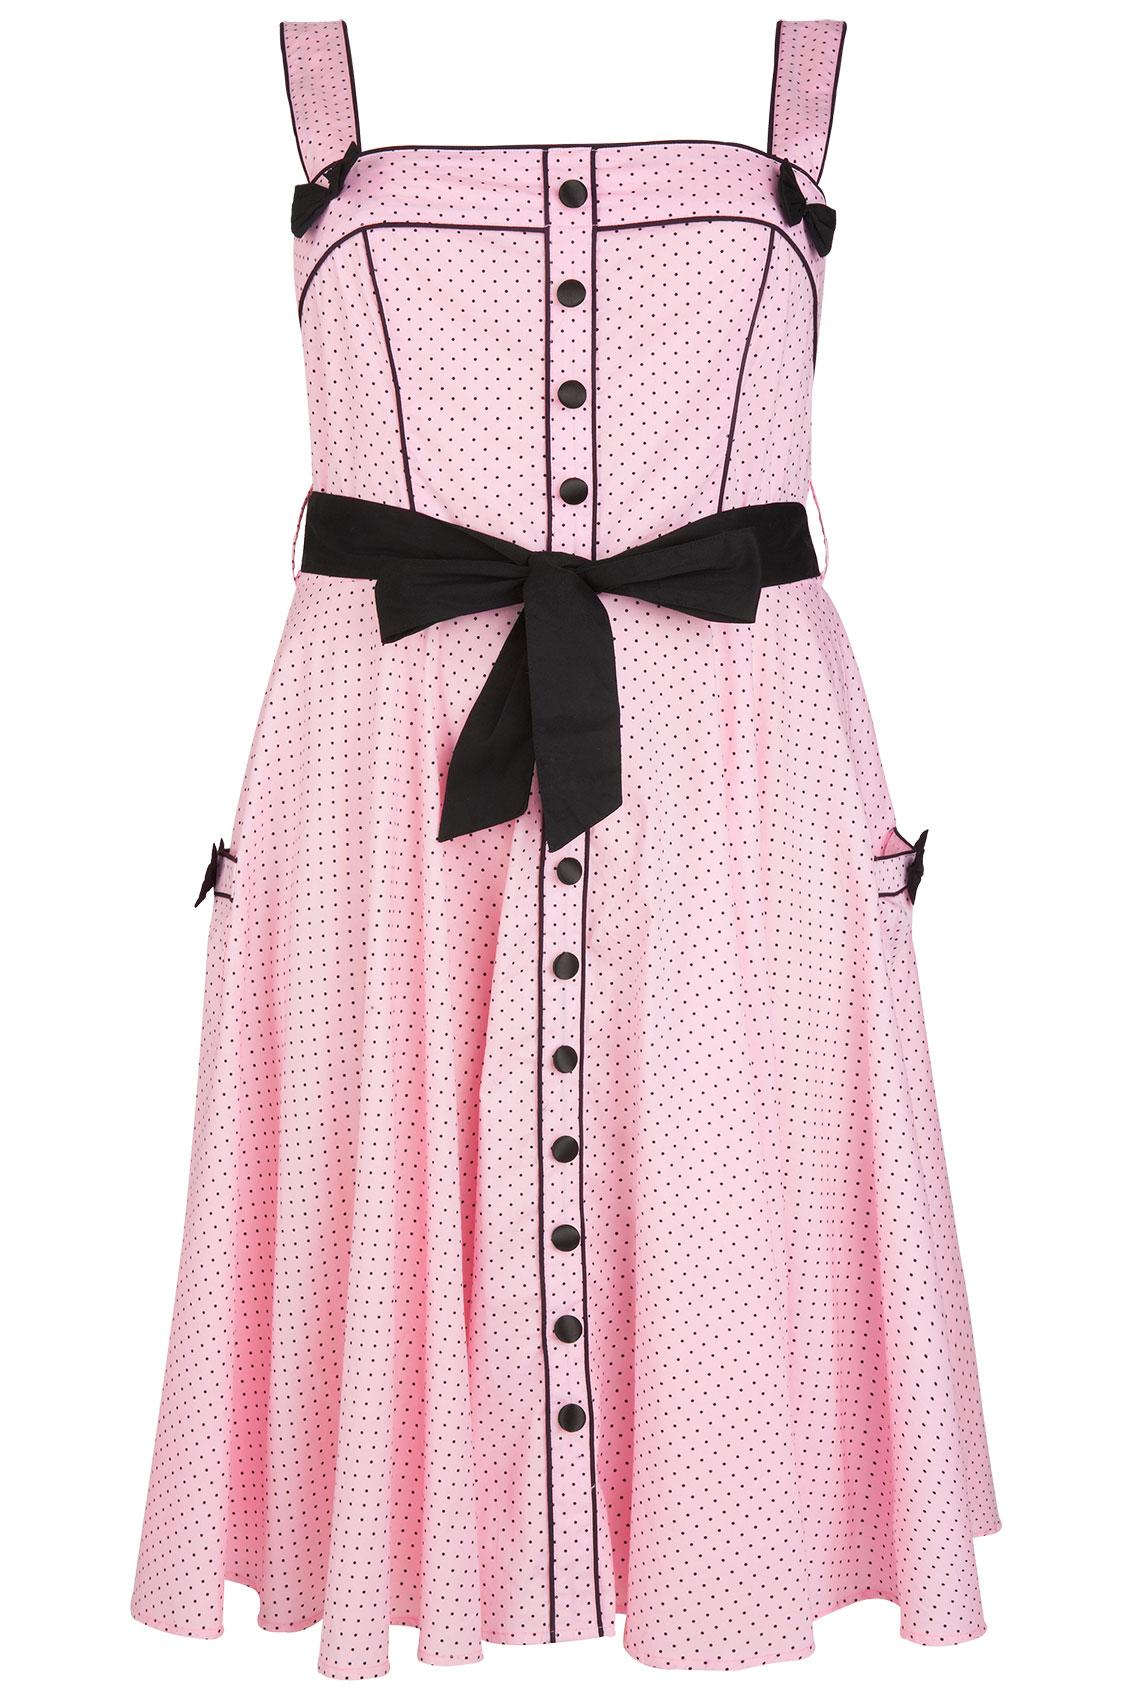 pink and black polka dot dress